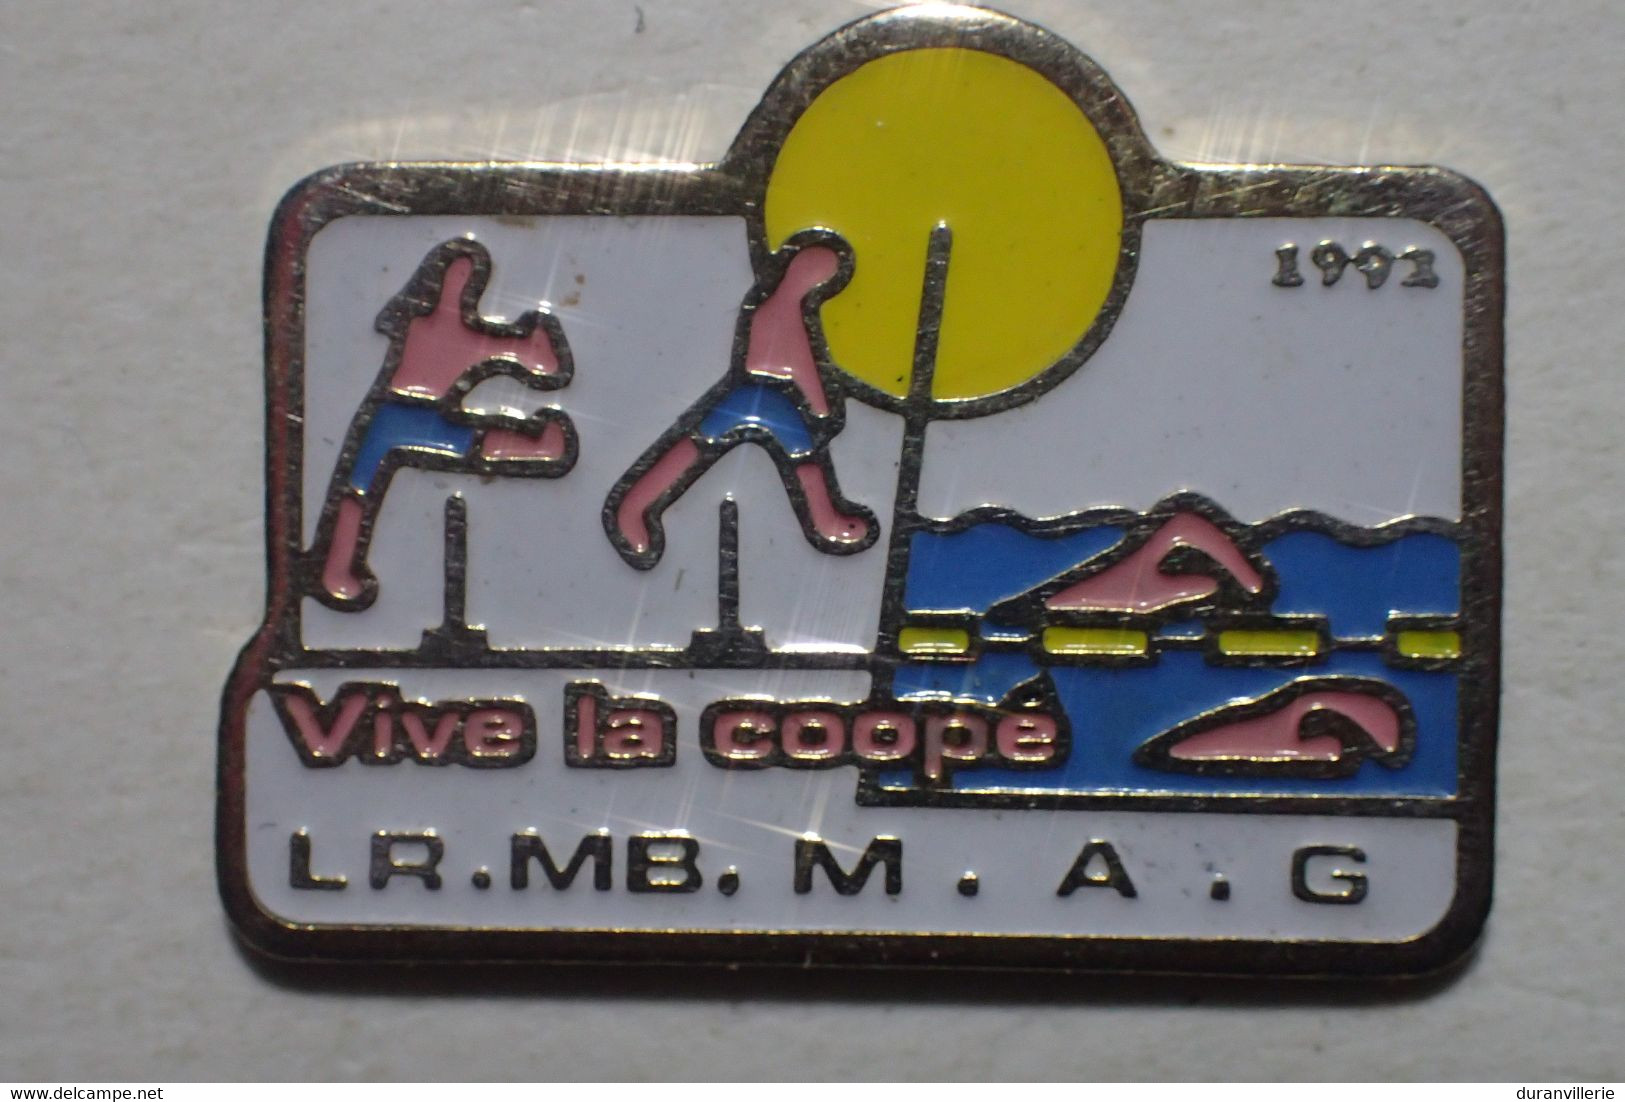 Pin's: SPORTS / VIVE LA COOPE NATATION COURSE DE HAIES LR MB MAG - Natation